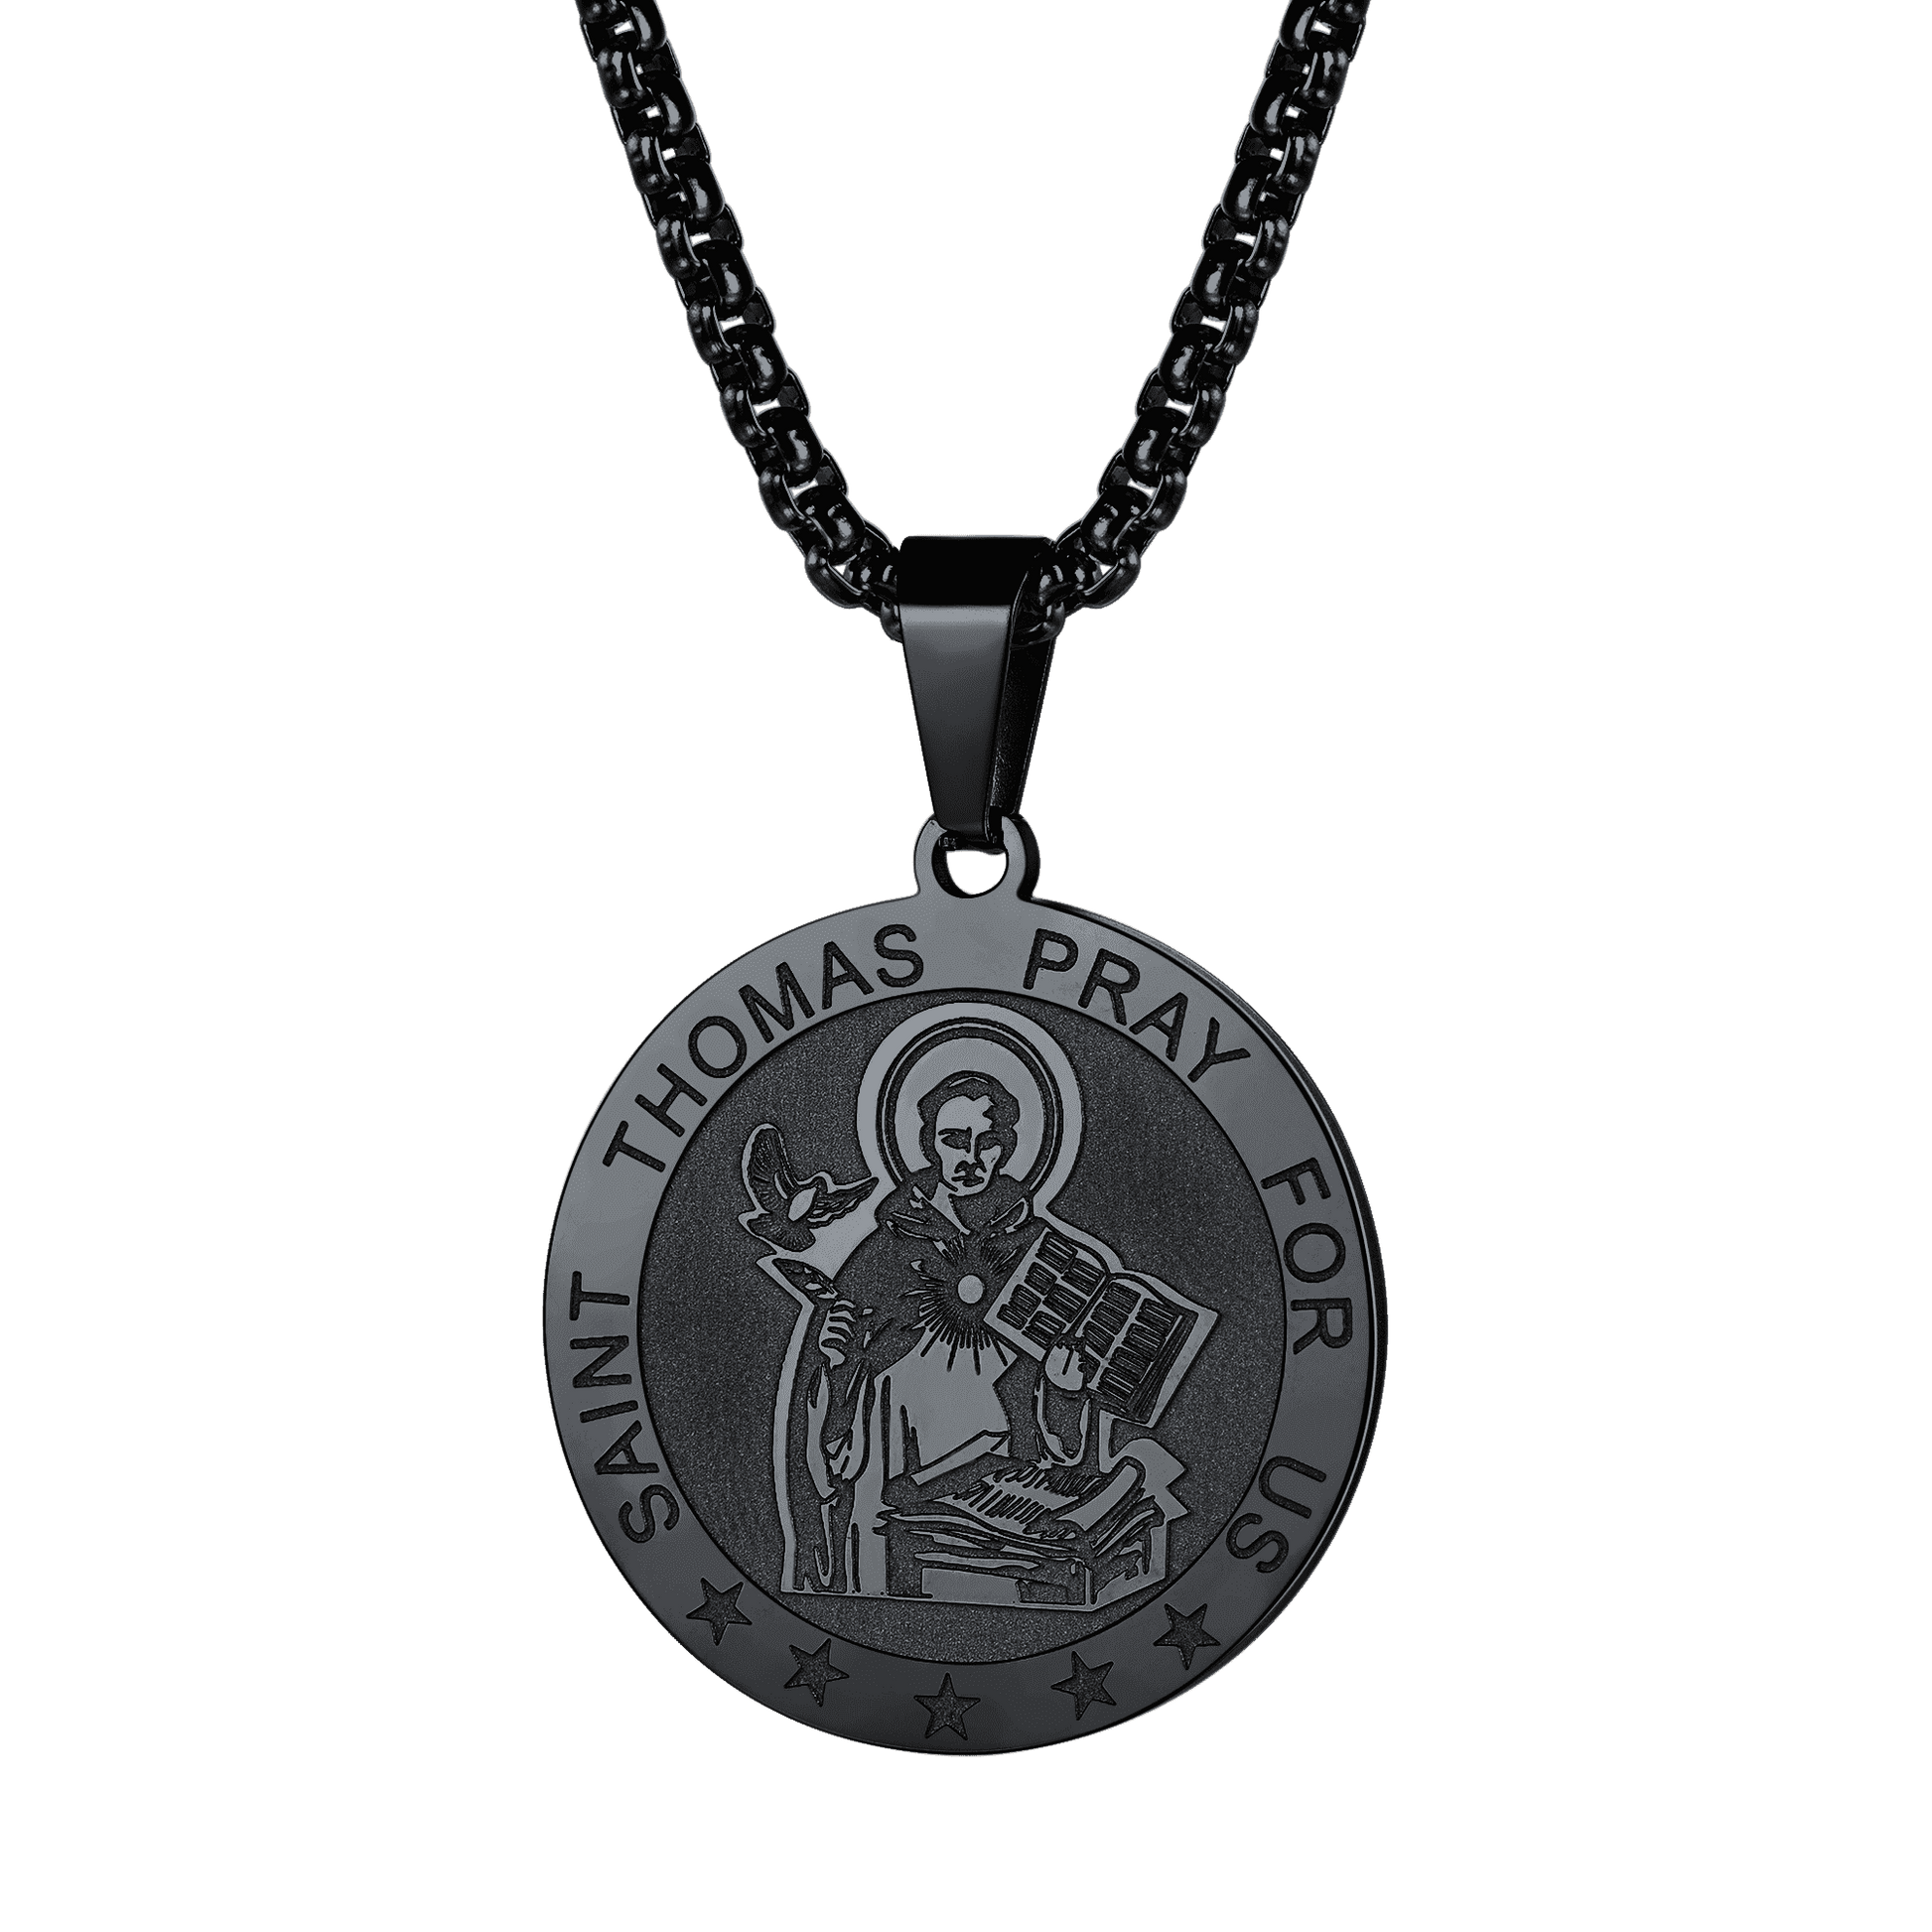 FaithHeart St Thomas Aquinas Engraved Necklace Patron Saints Charms FaithHeart